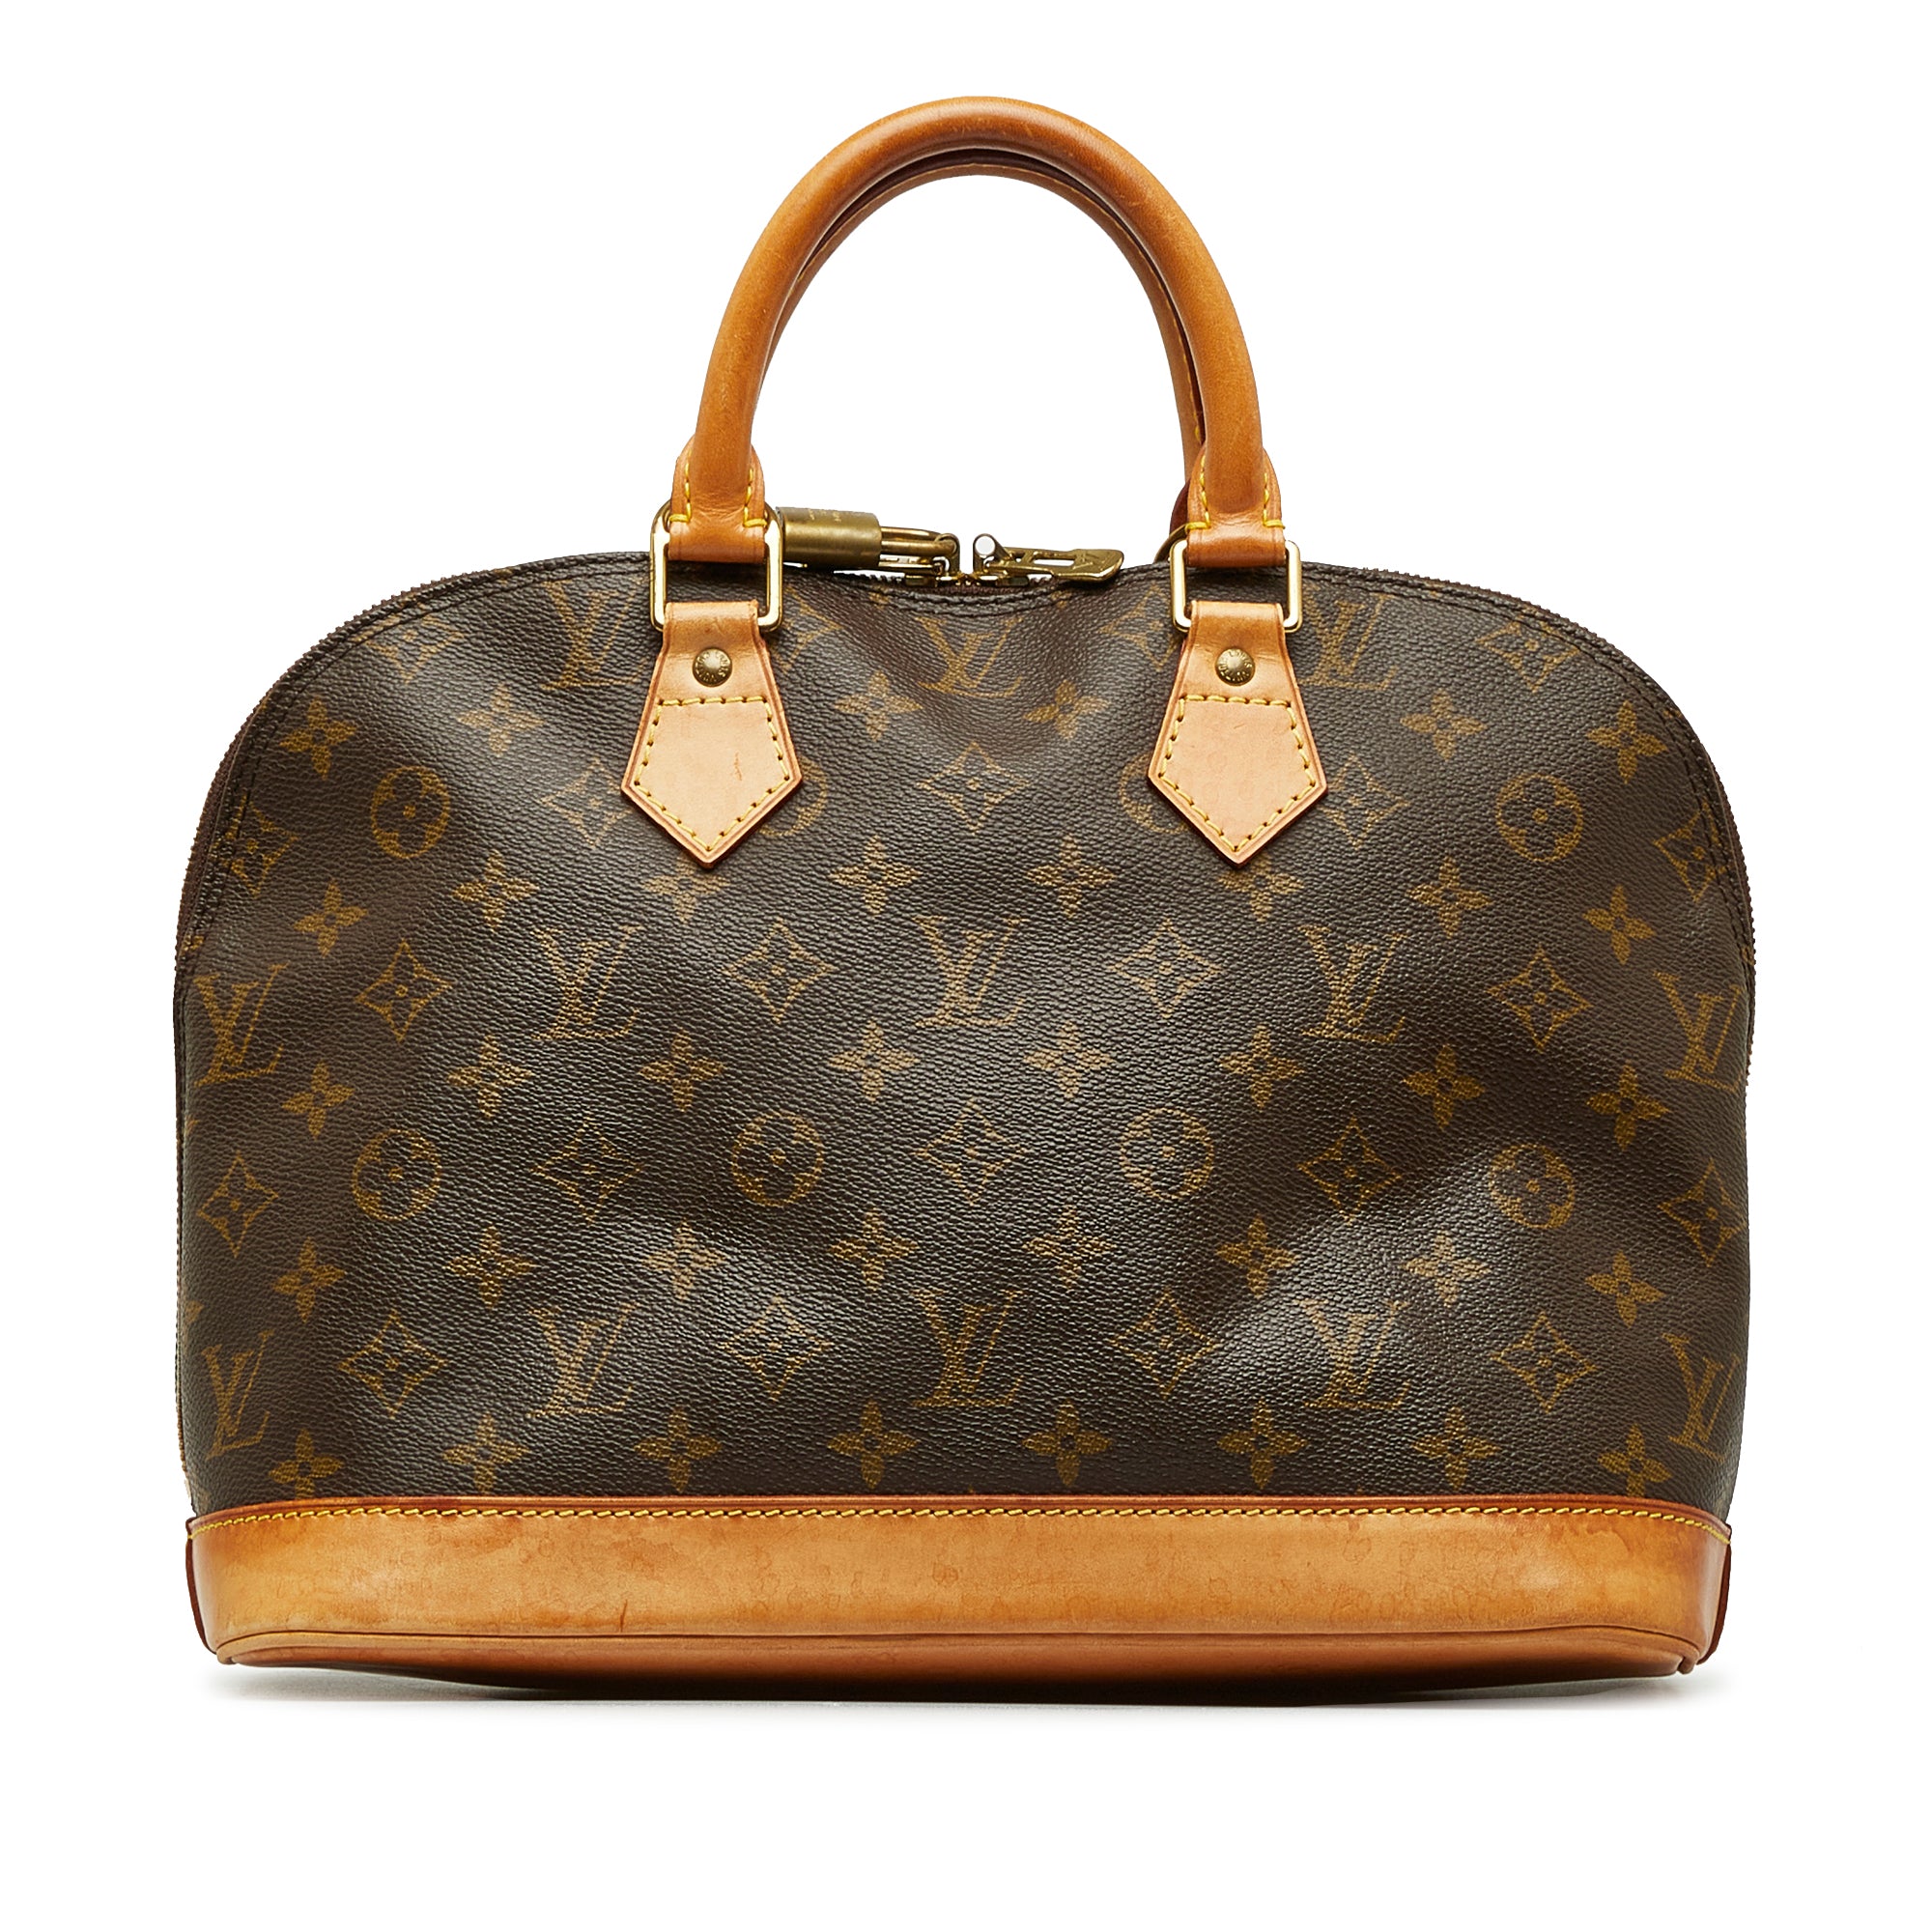 Preloved Authentic Louis Vuitton Monogram Alma Hand Bag Purse